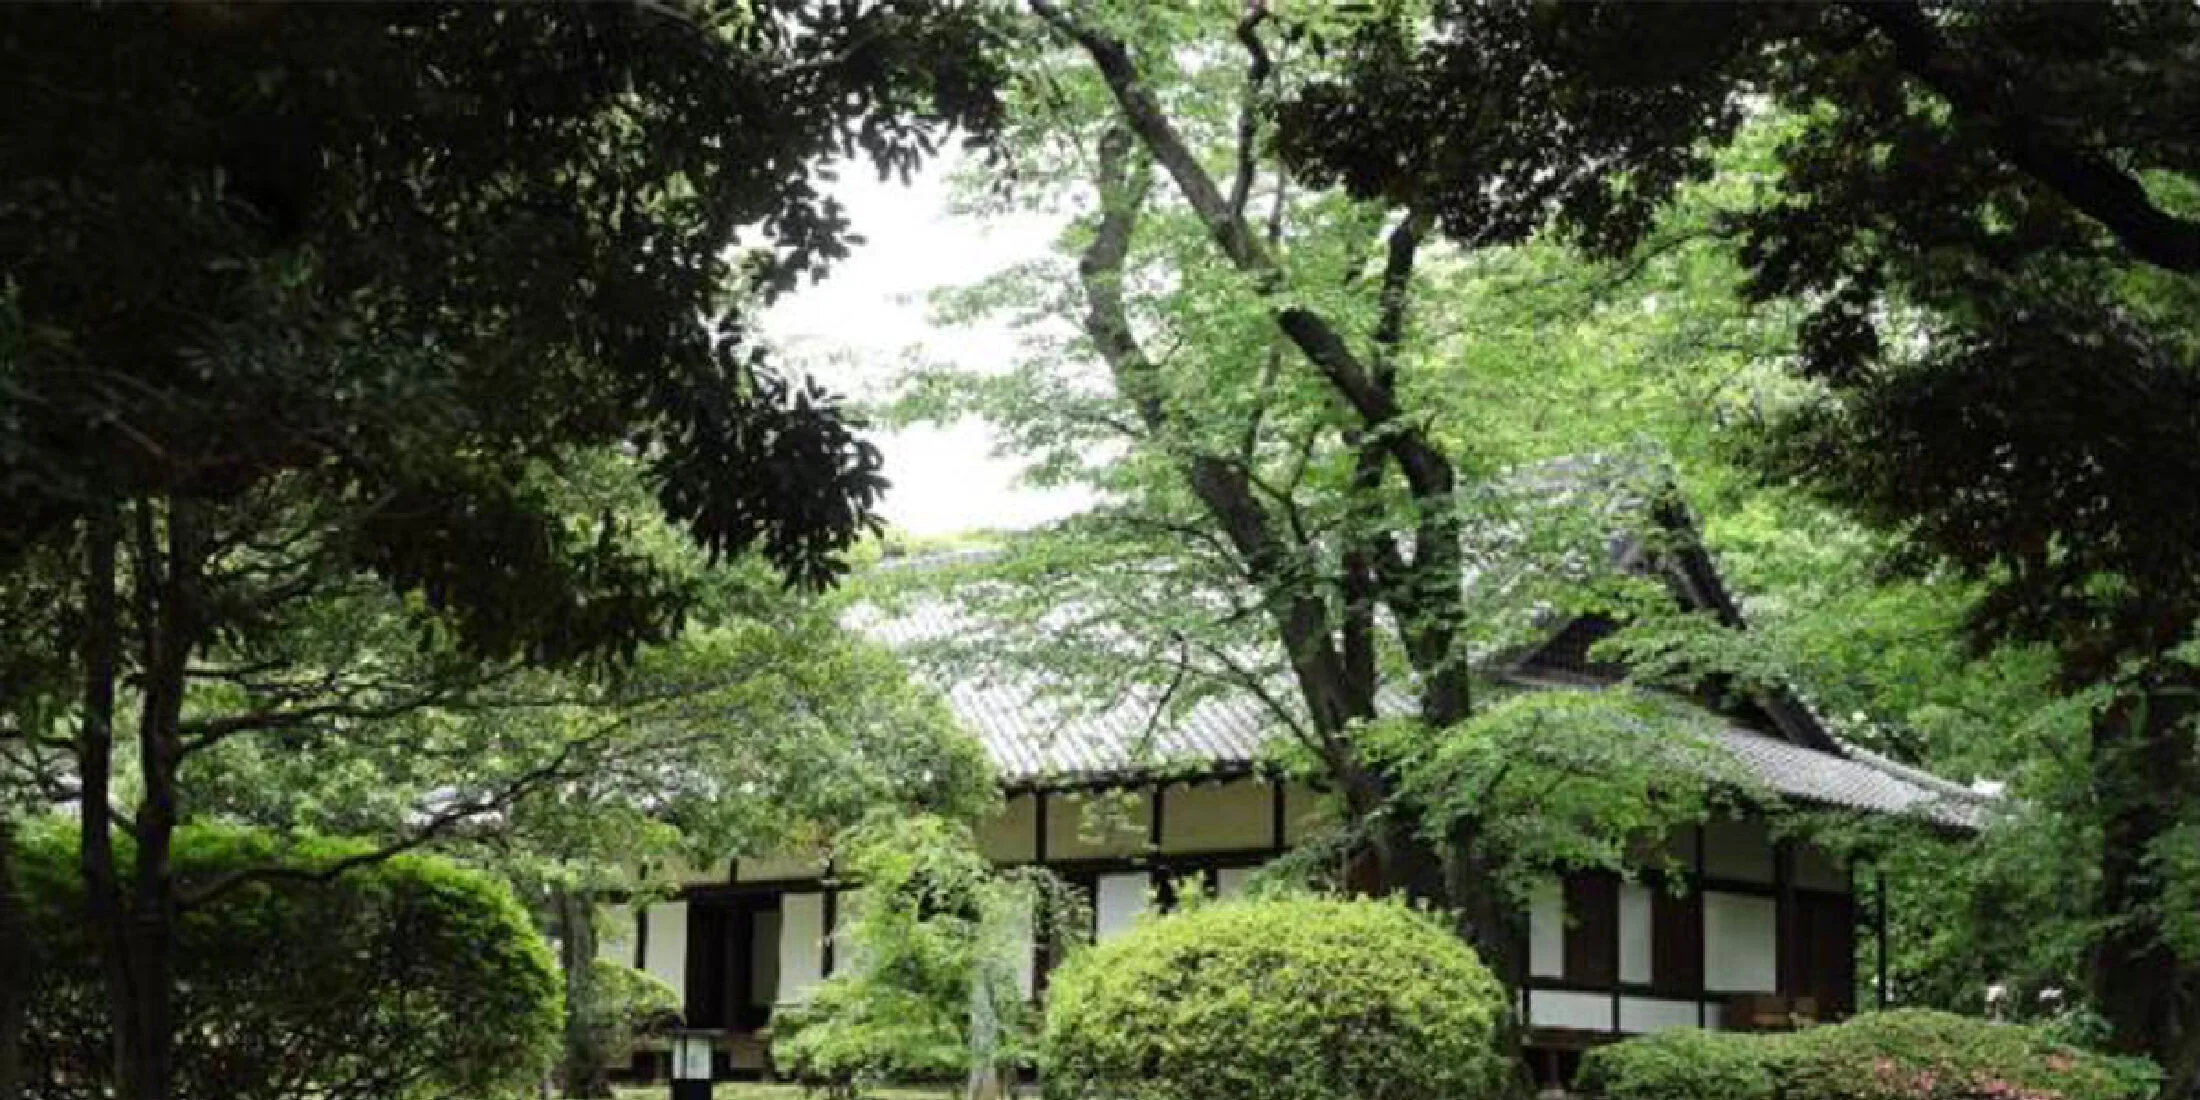 東京国立博物館の貴重な歴史的建造物で、日本文化の魅力を再発見。「TOHAKU茶館」開催